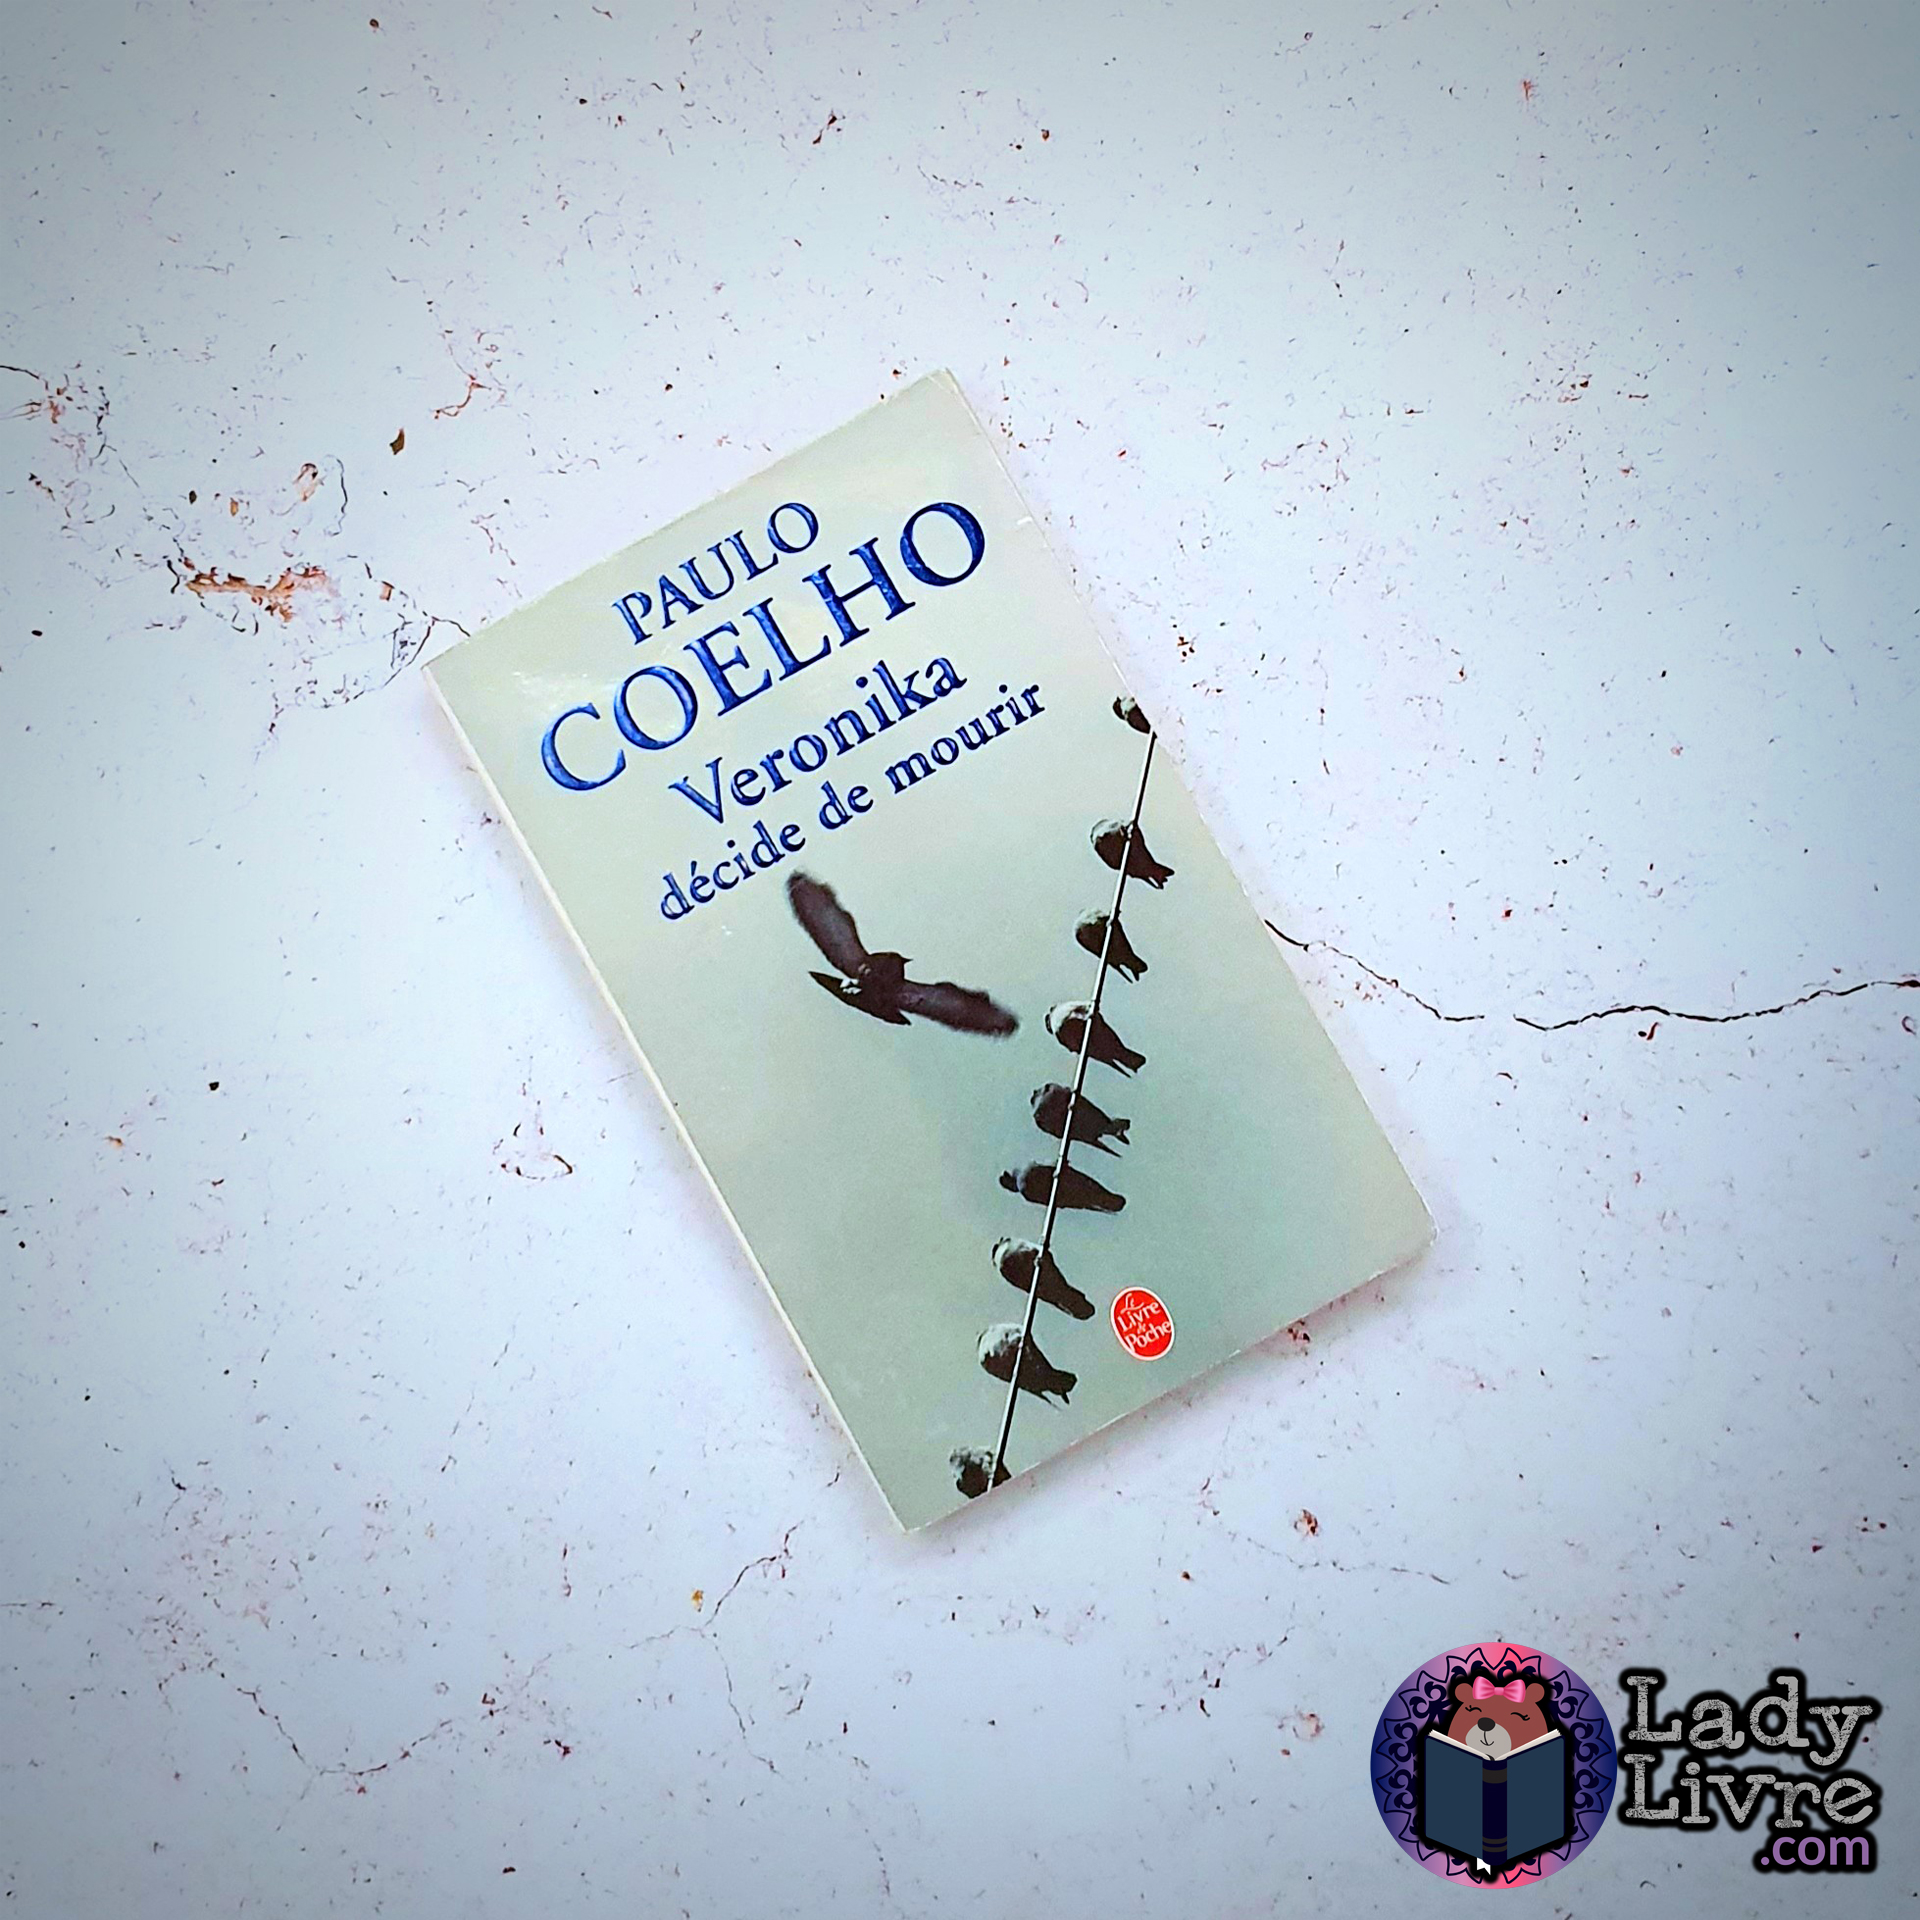 Veronika décide de mourir - Paolo Coelho